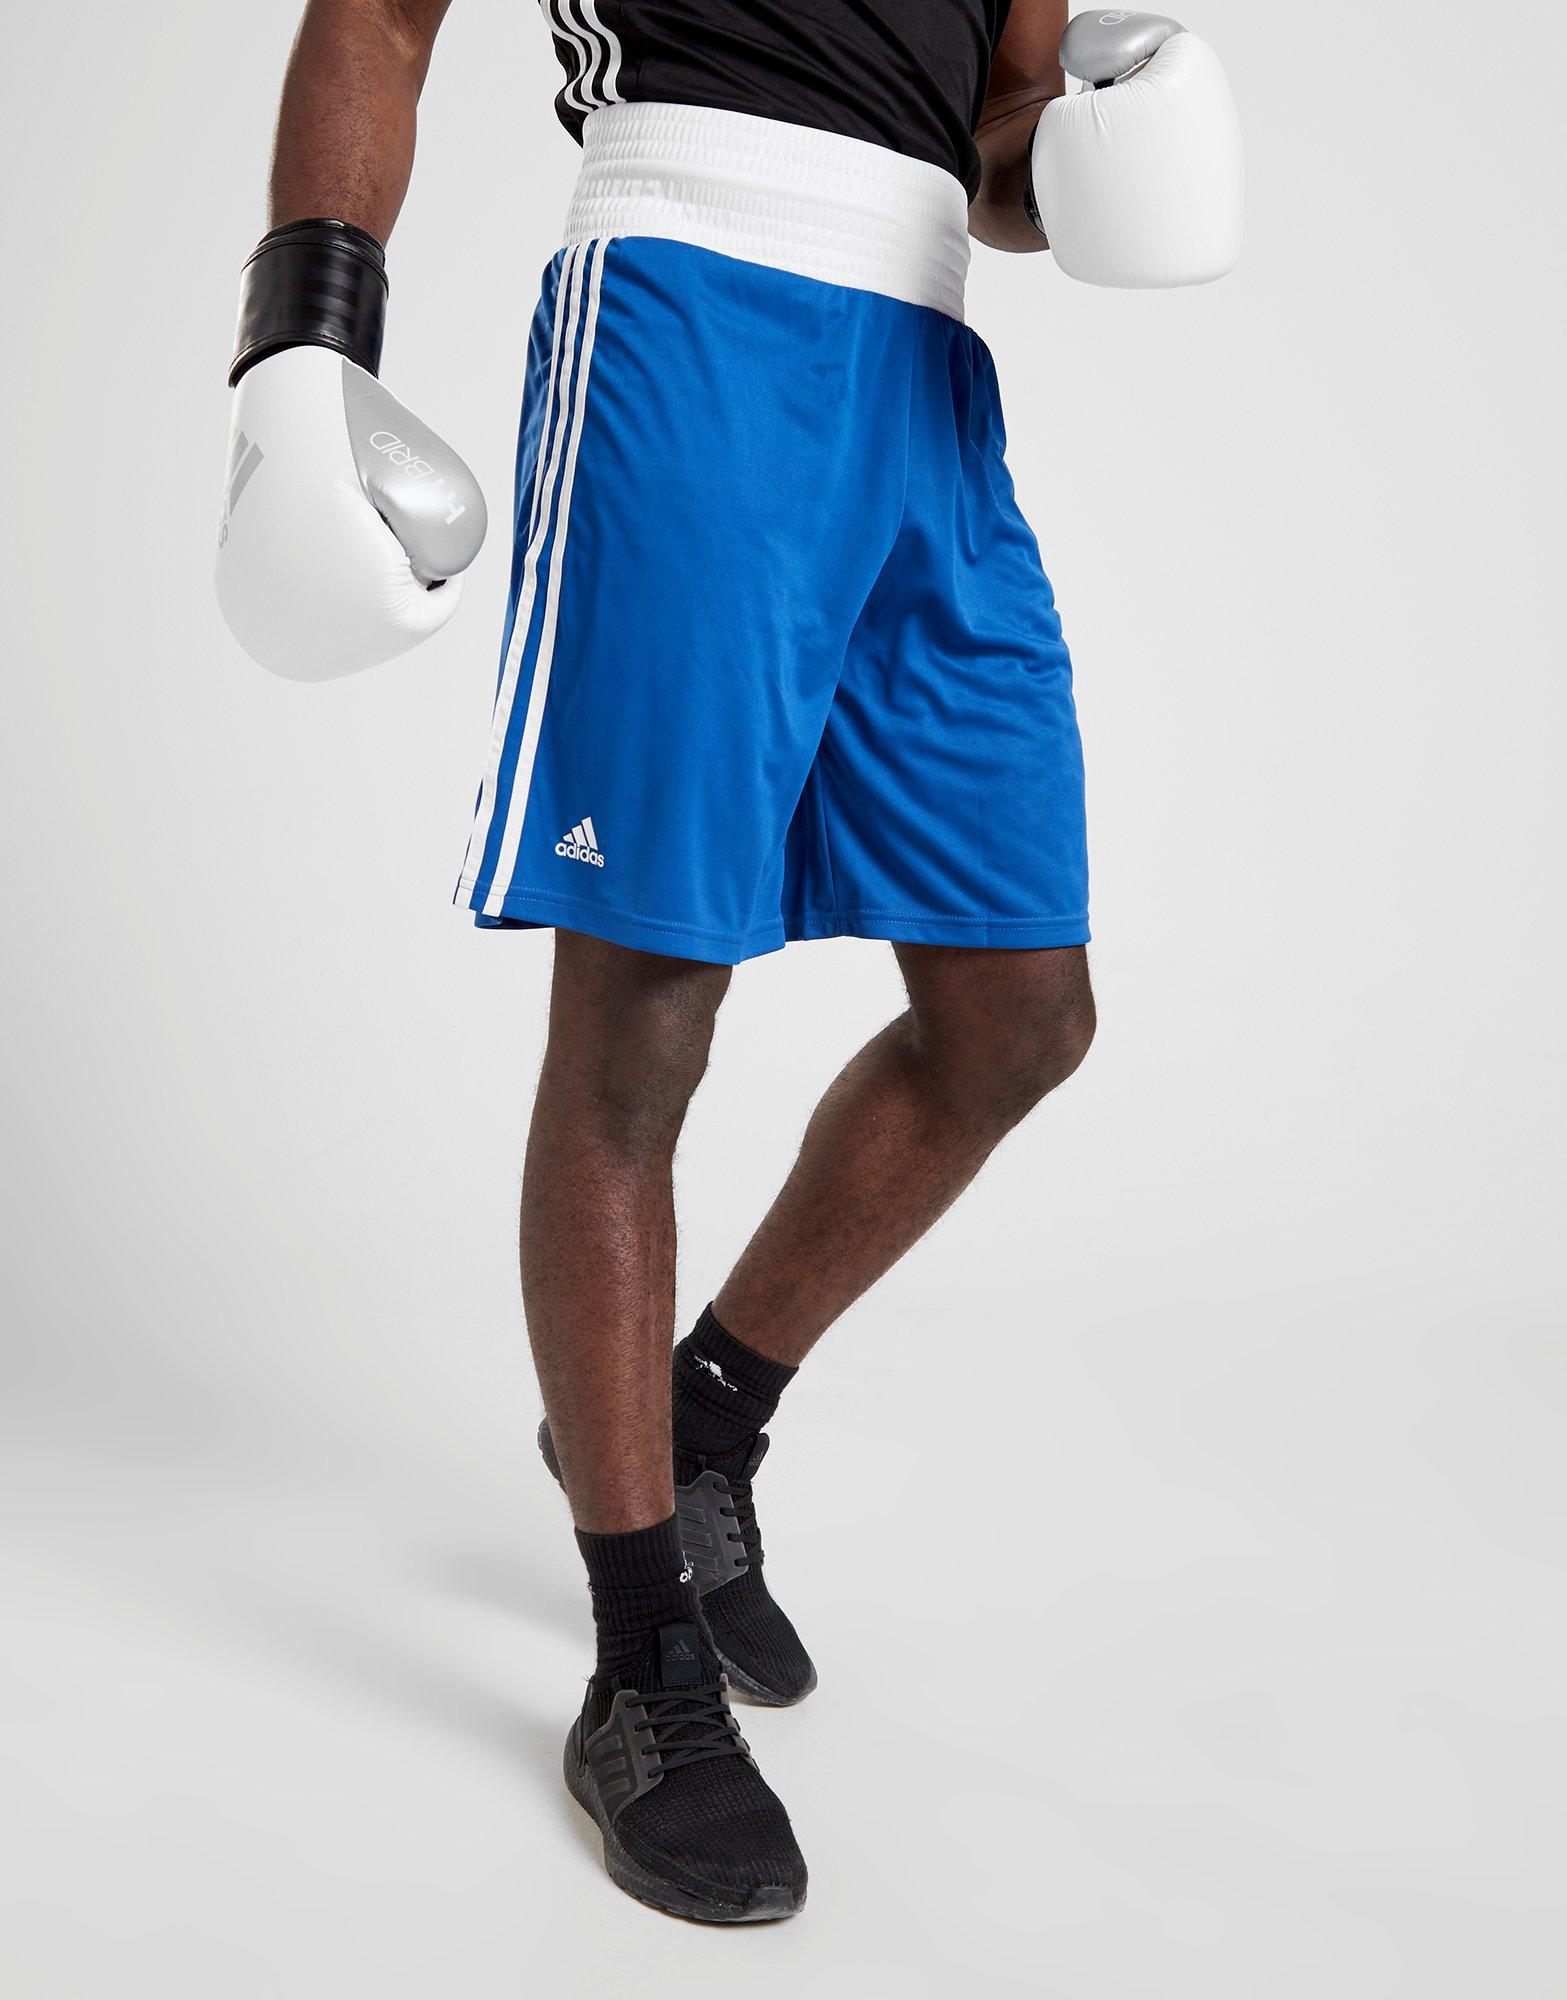 adidas base punch boxing shorts